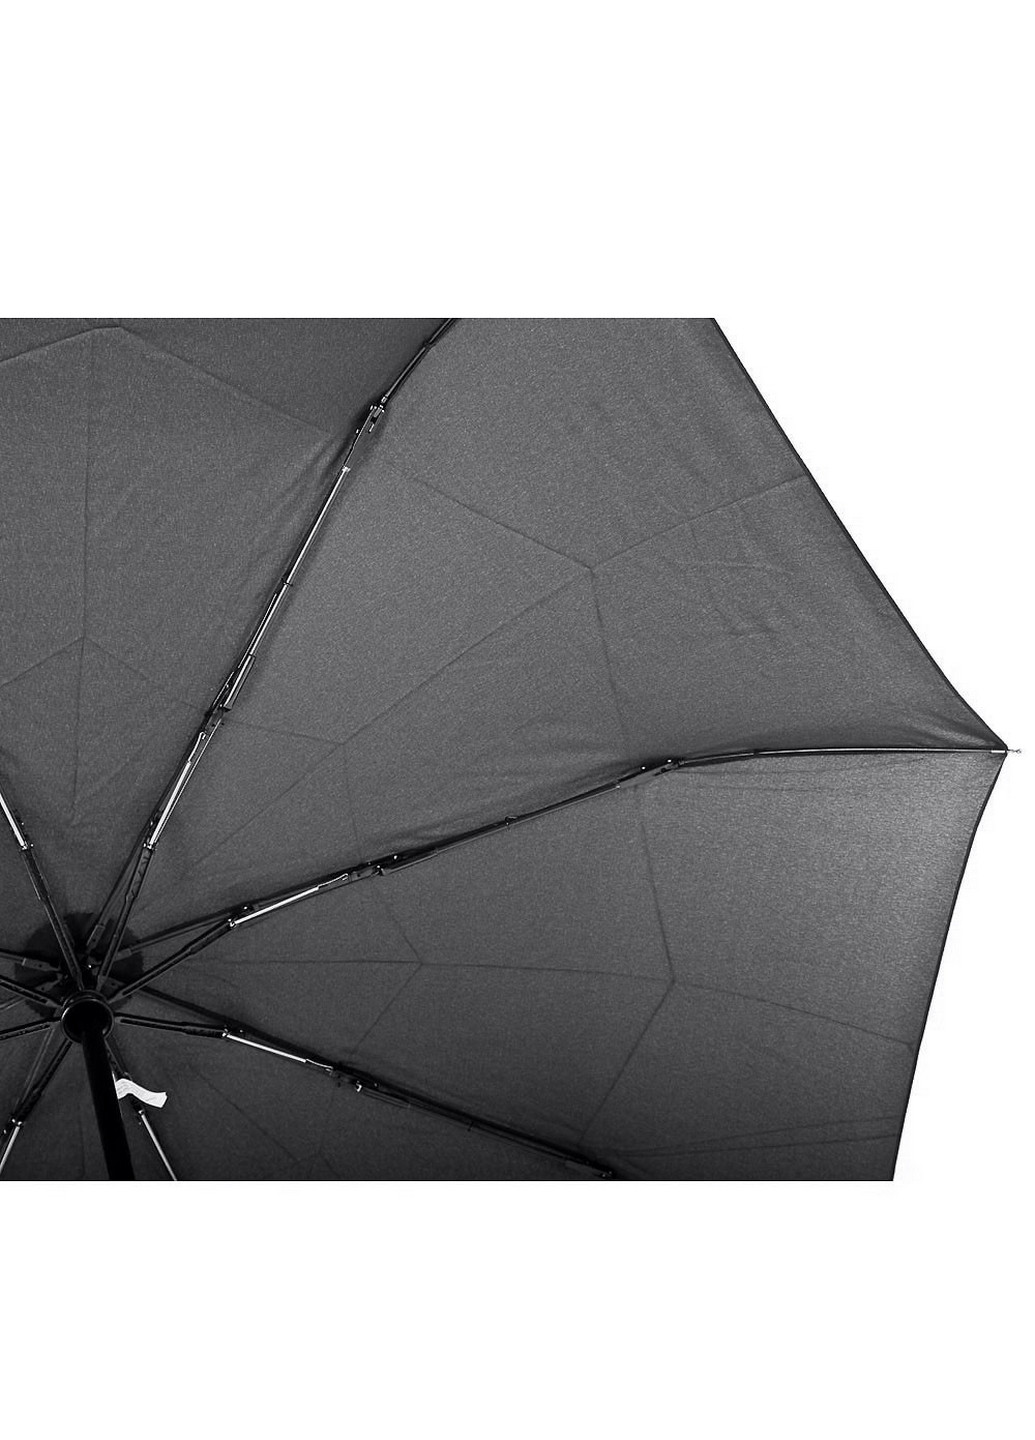 Складной мужской зонт автомат 105 см FARE (260285526)